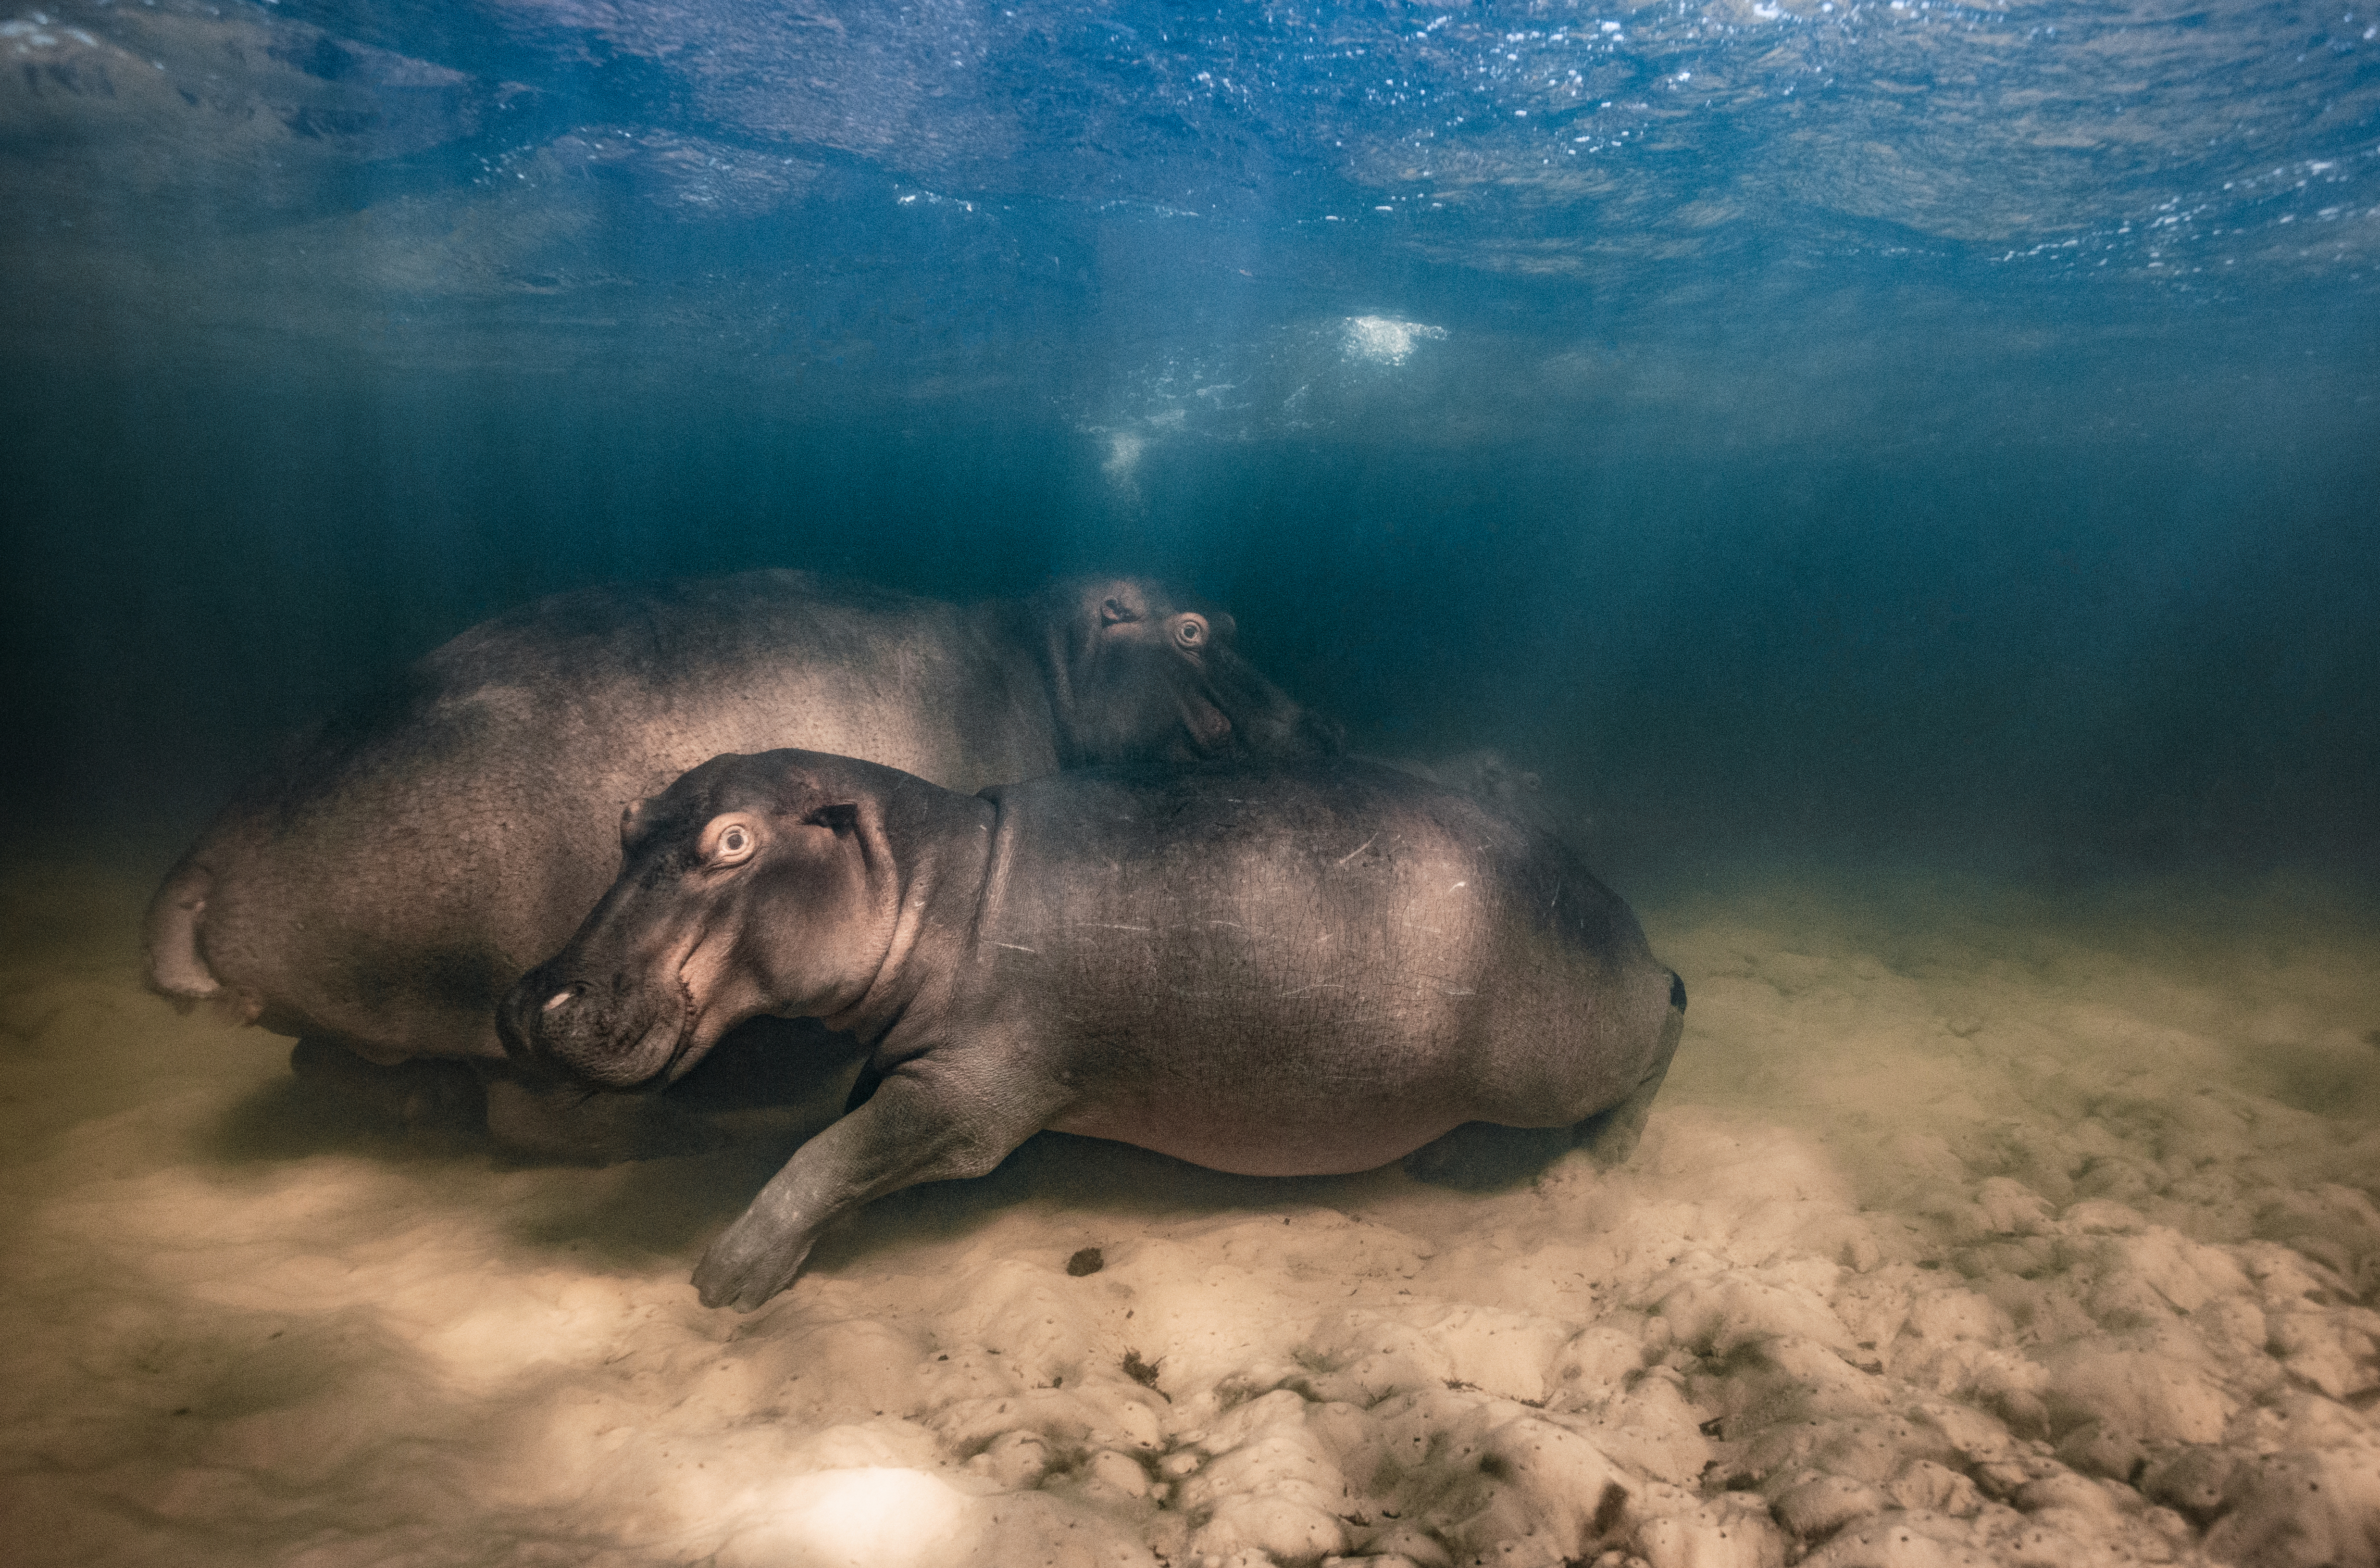 Under Water by © Mike Korostelev. Winner, Underwater. Location: Kosi Bay, iSimangaliso Wetland Park, South Africa